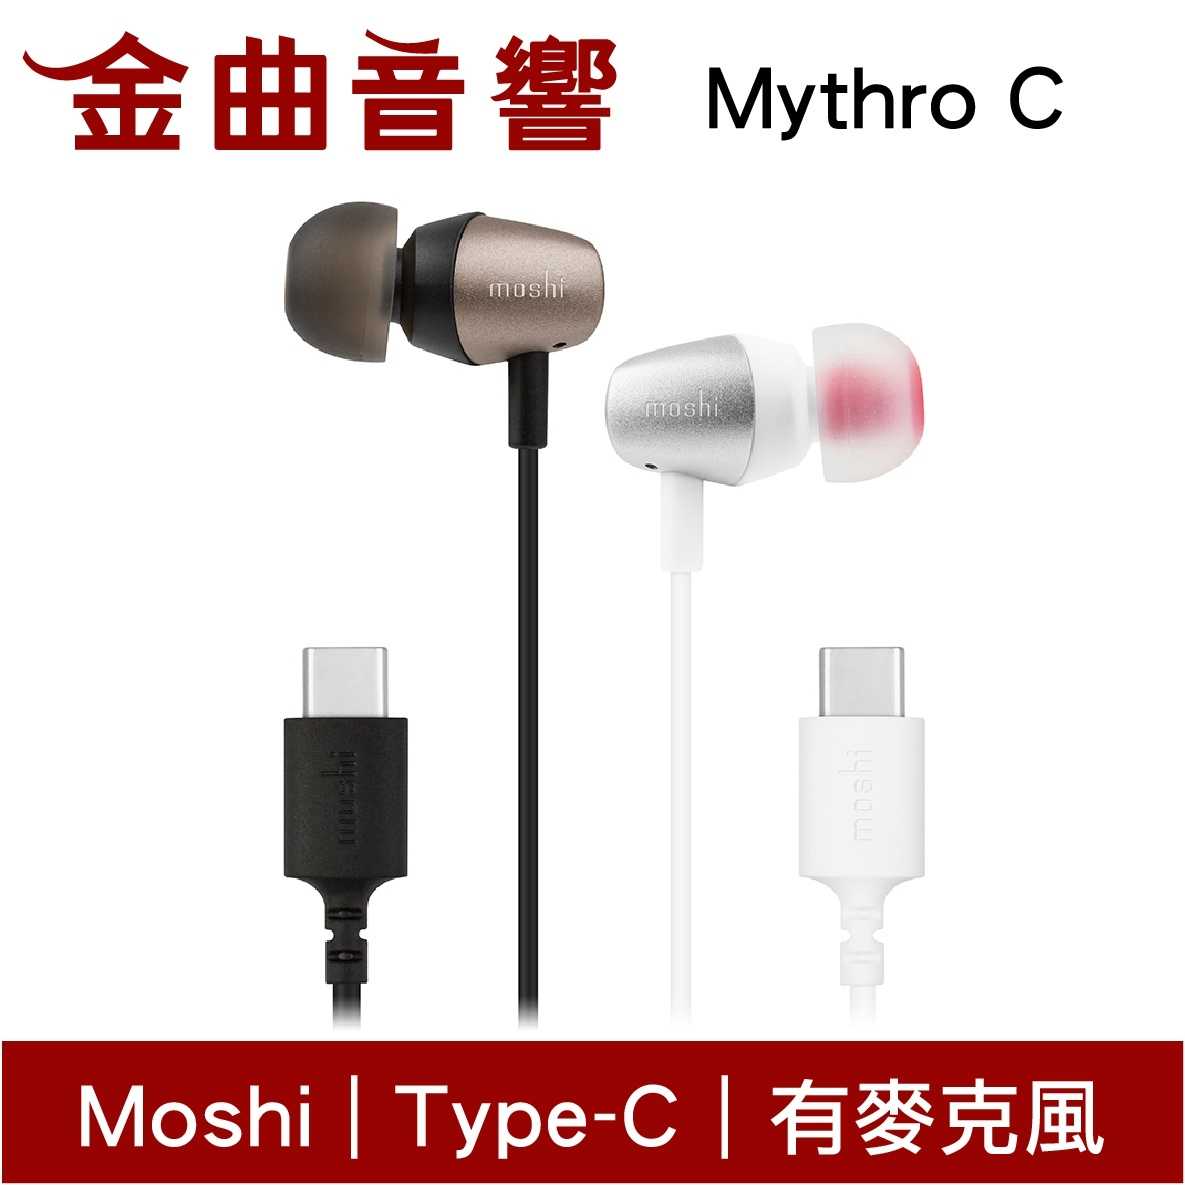 Moshi Mythro C USB Type-C 鈦灰色 耳機 麥克風耳機 | 金曲音響